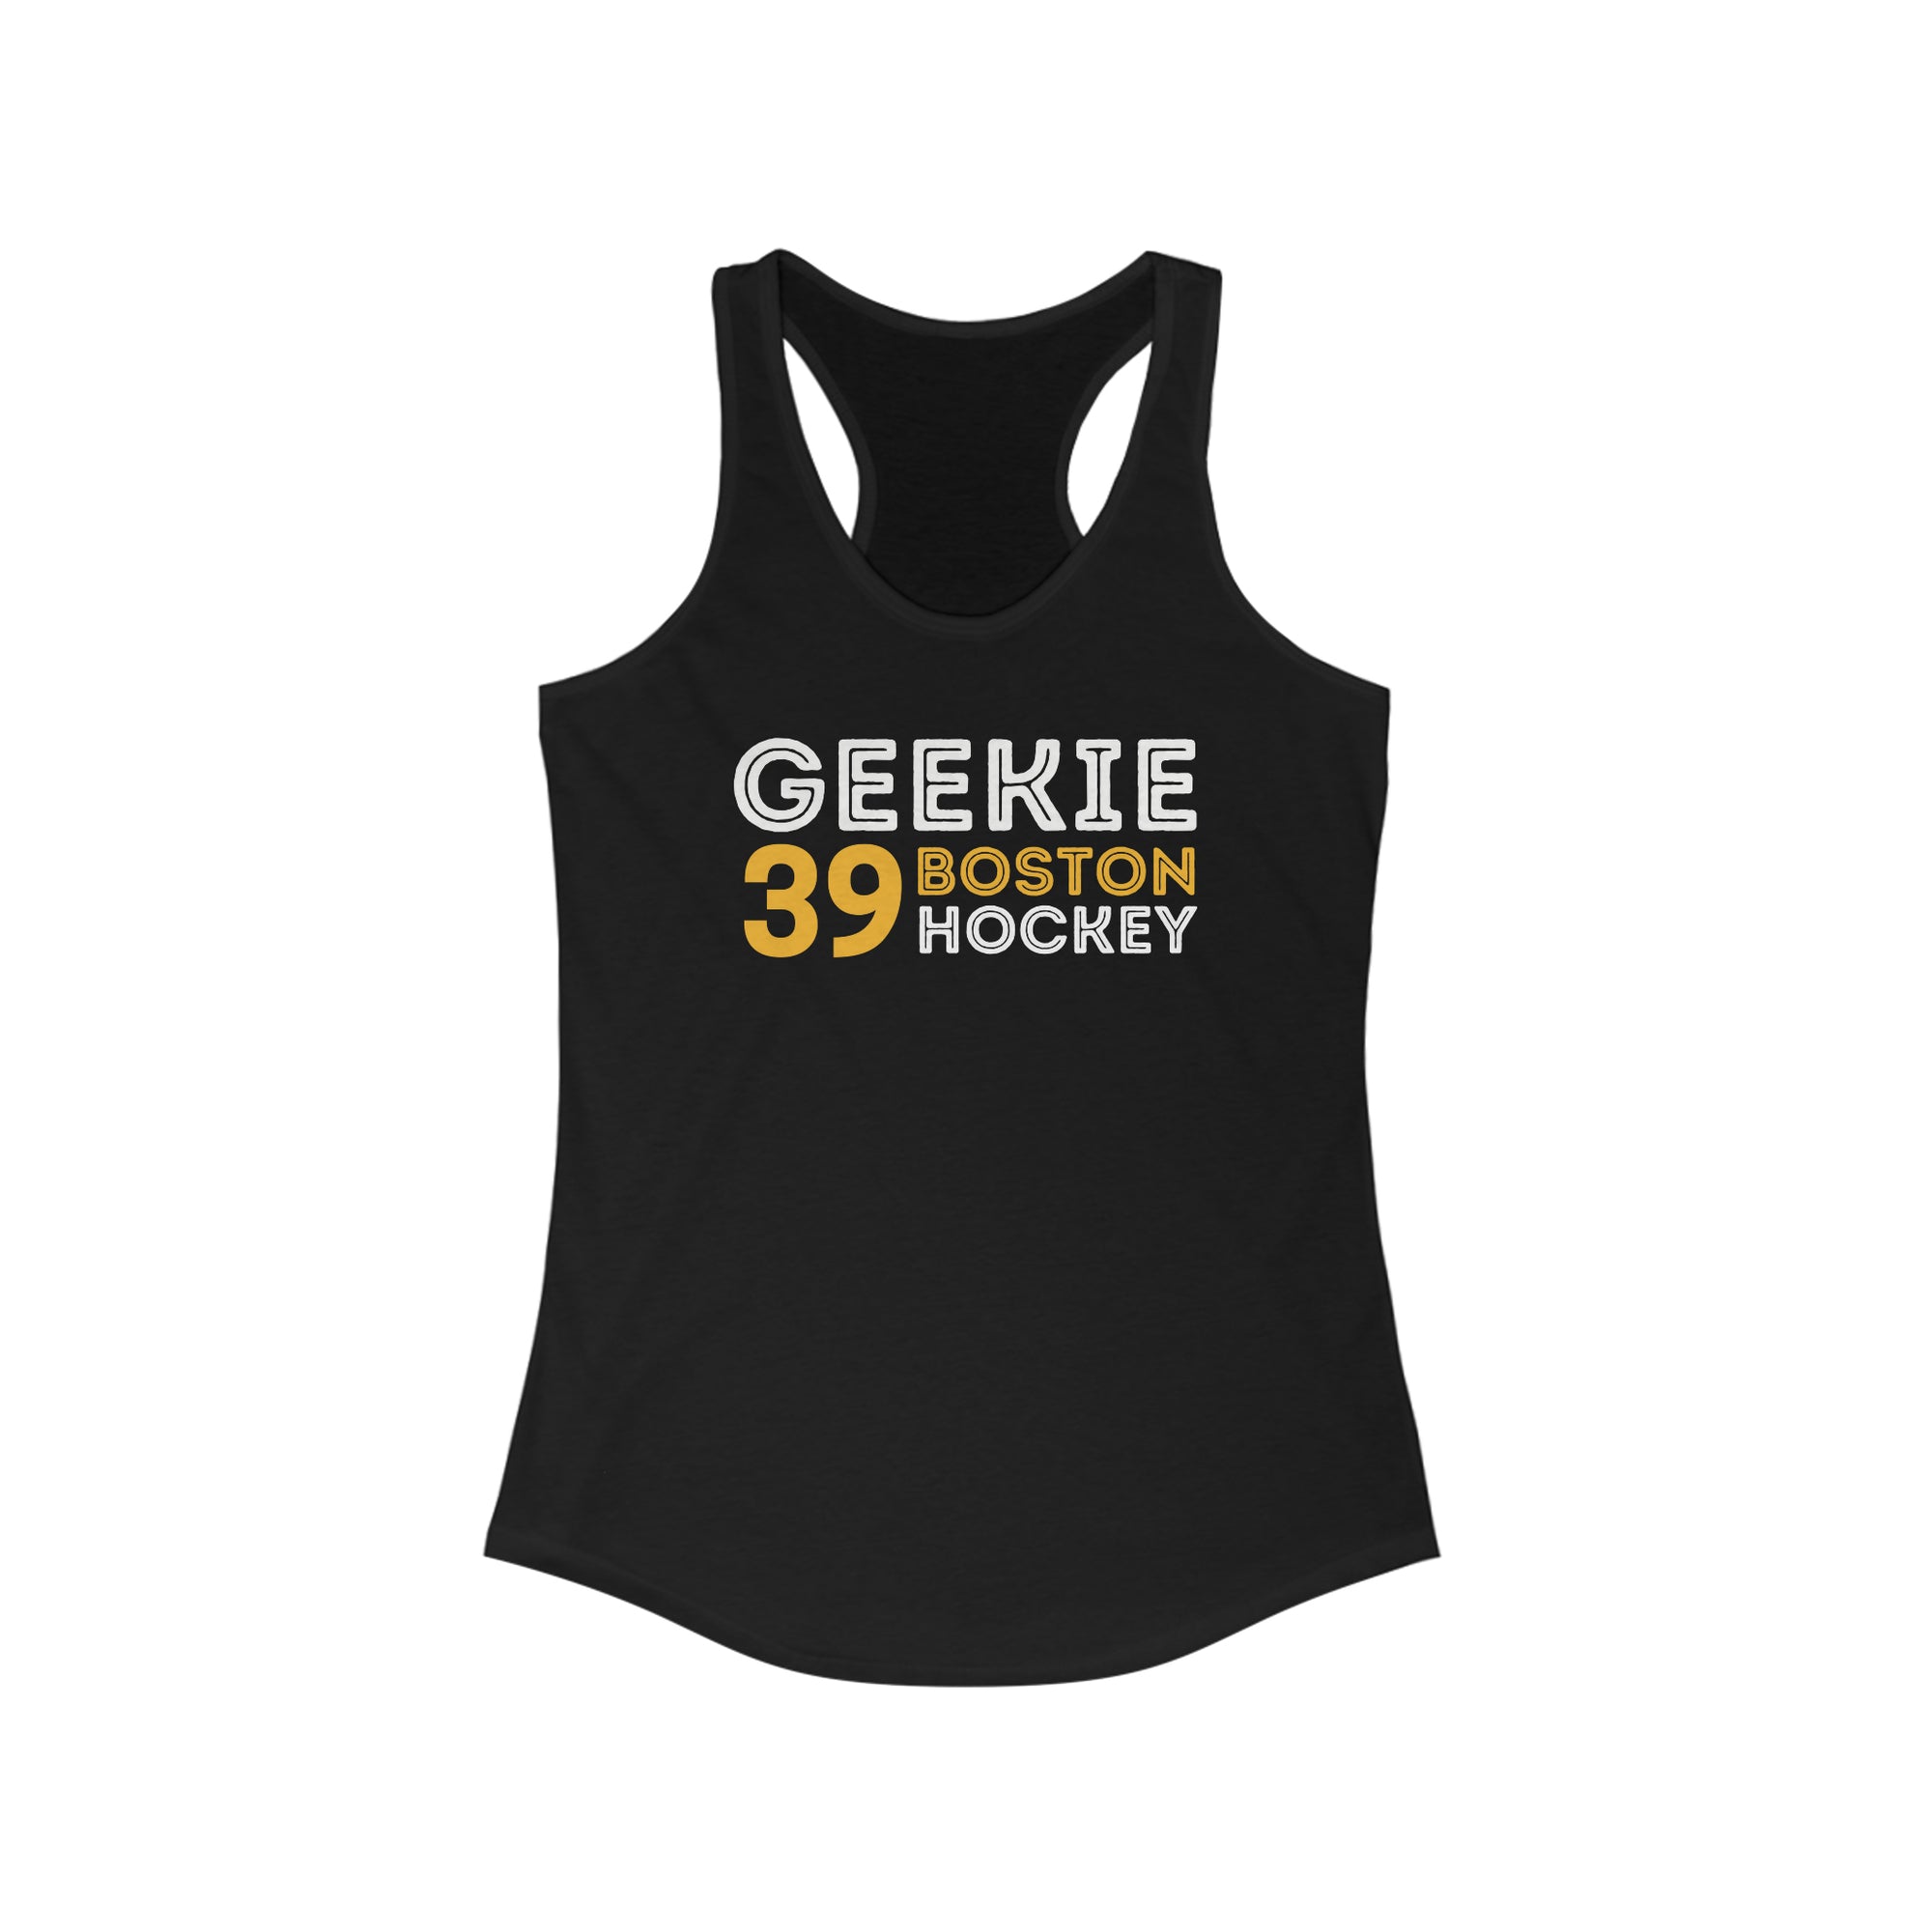 Geekie 39 Boston Hockey Grafitti Wall Design Women's Ideal Racerback Tank Top